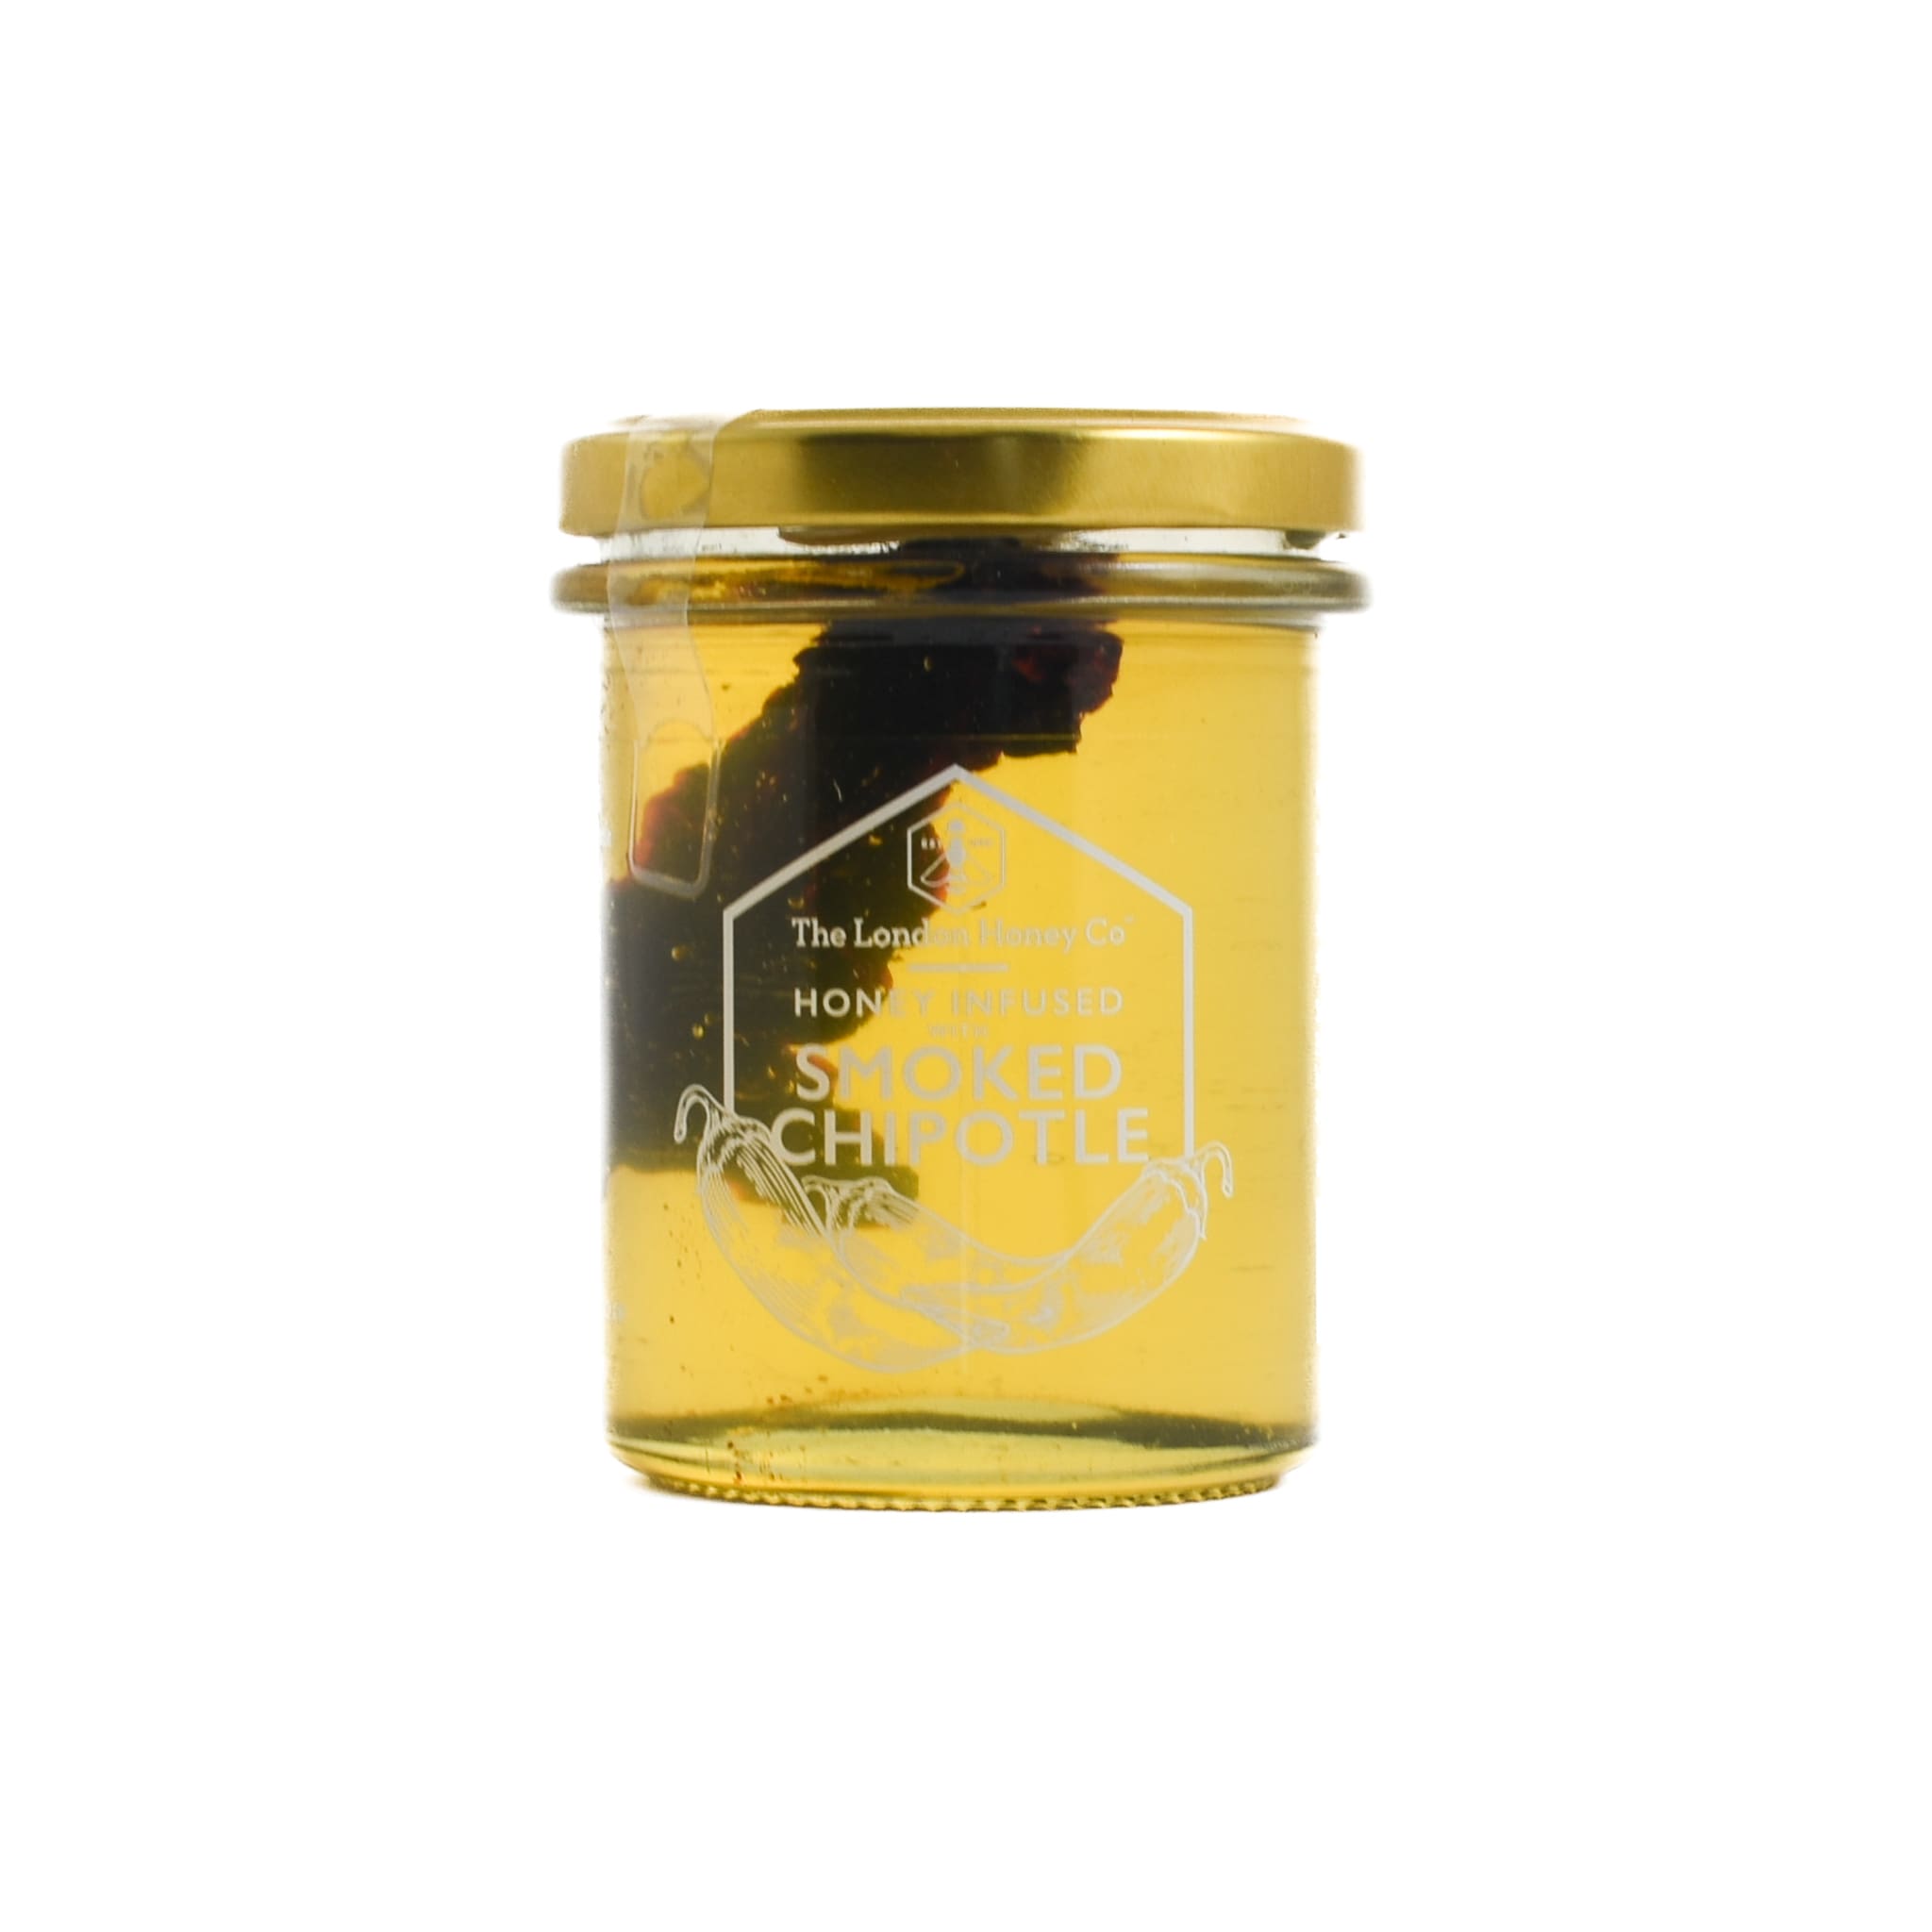 The London Honey Co Smoked Chipotle Honey, 250g